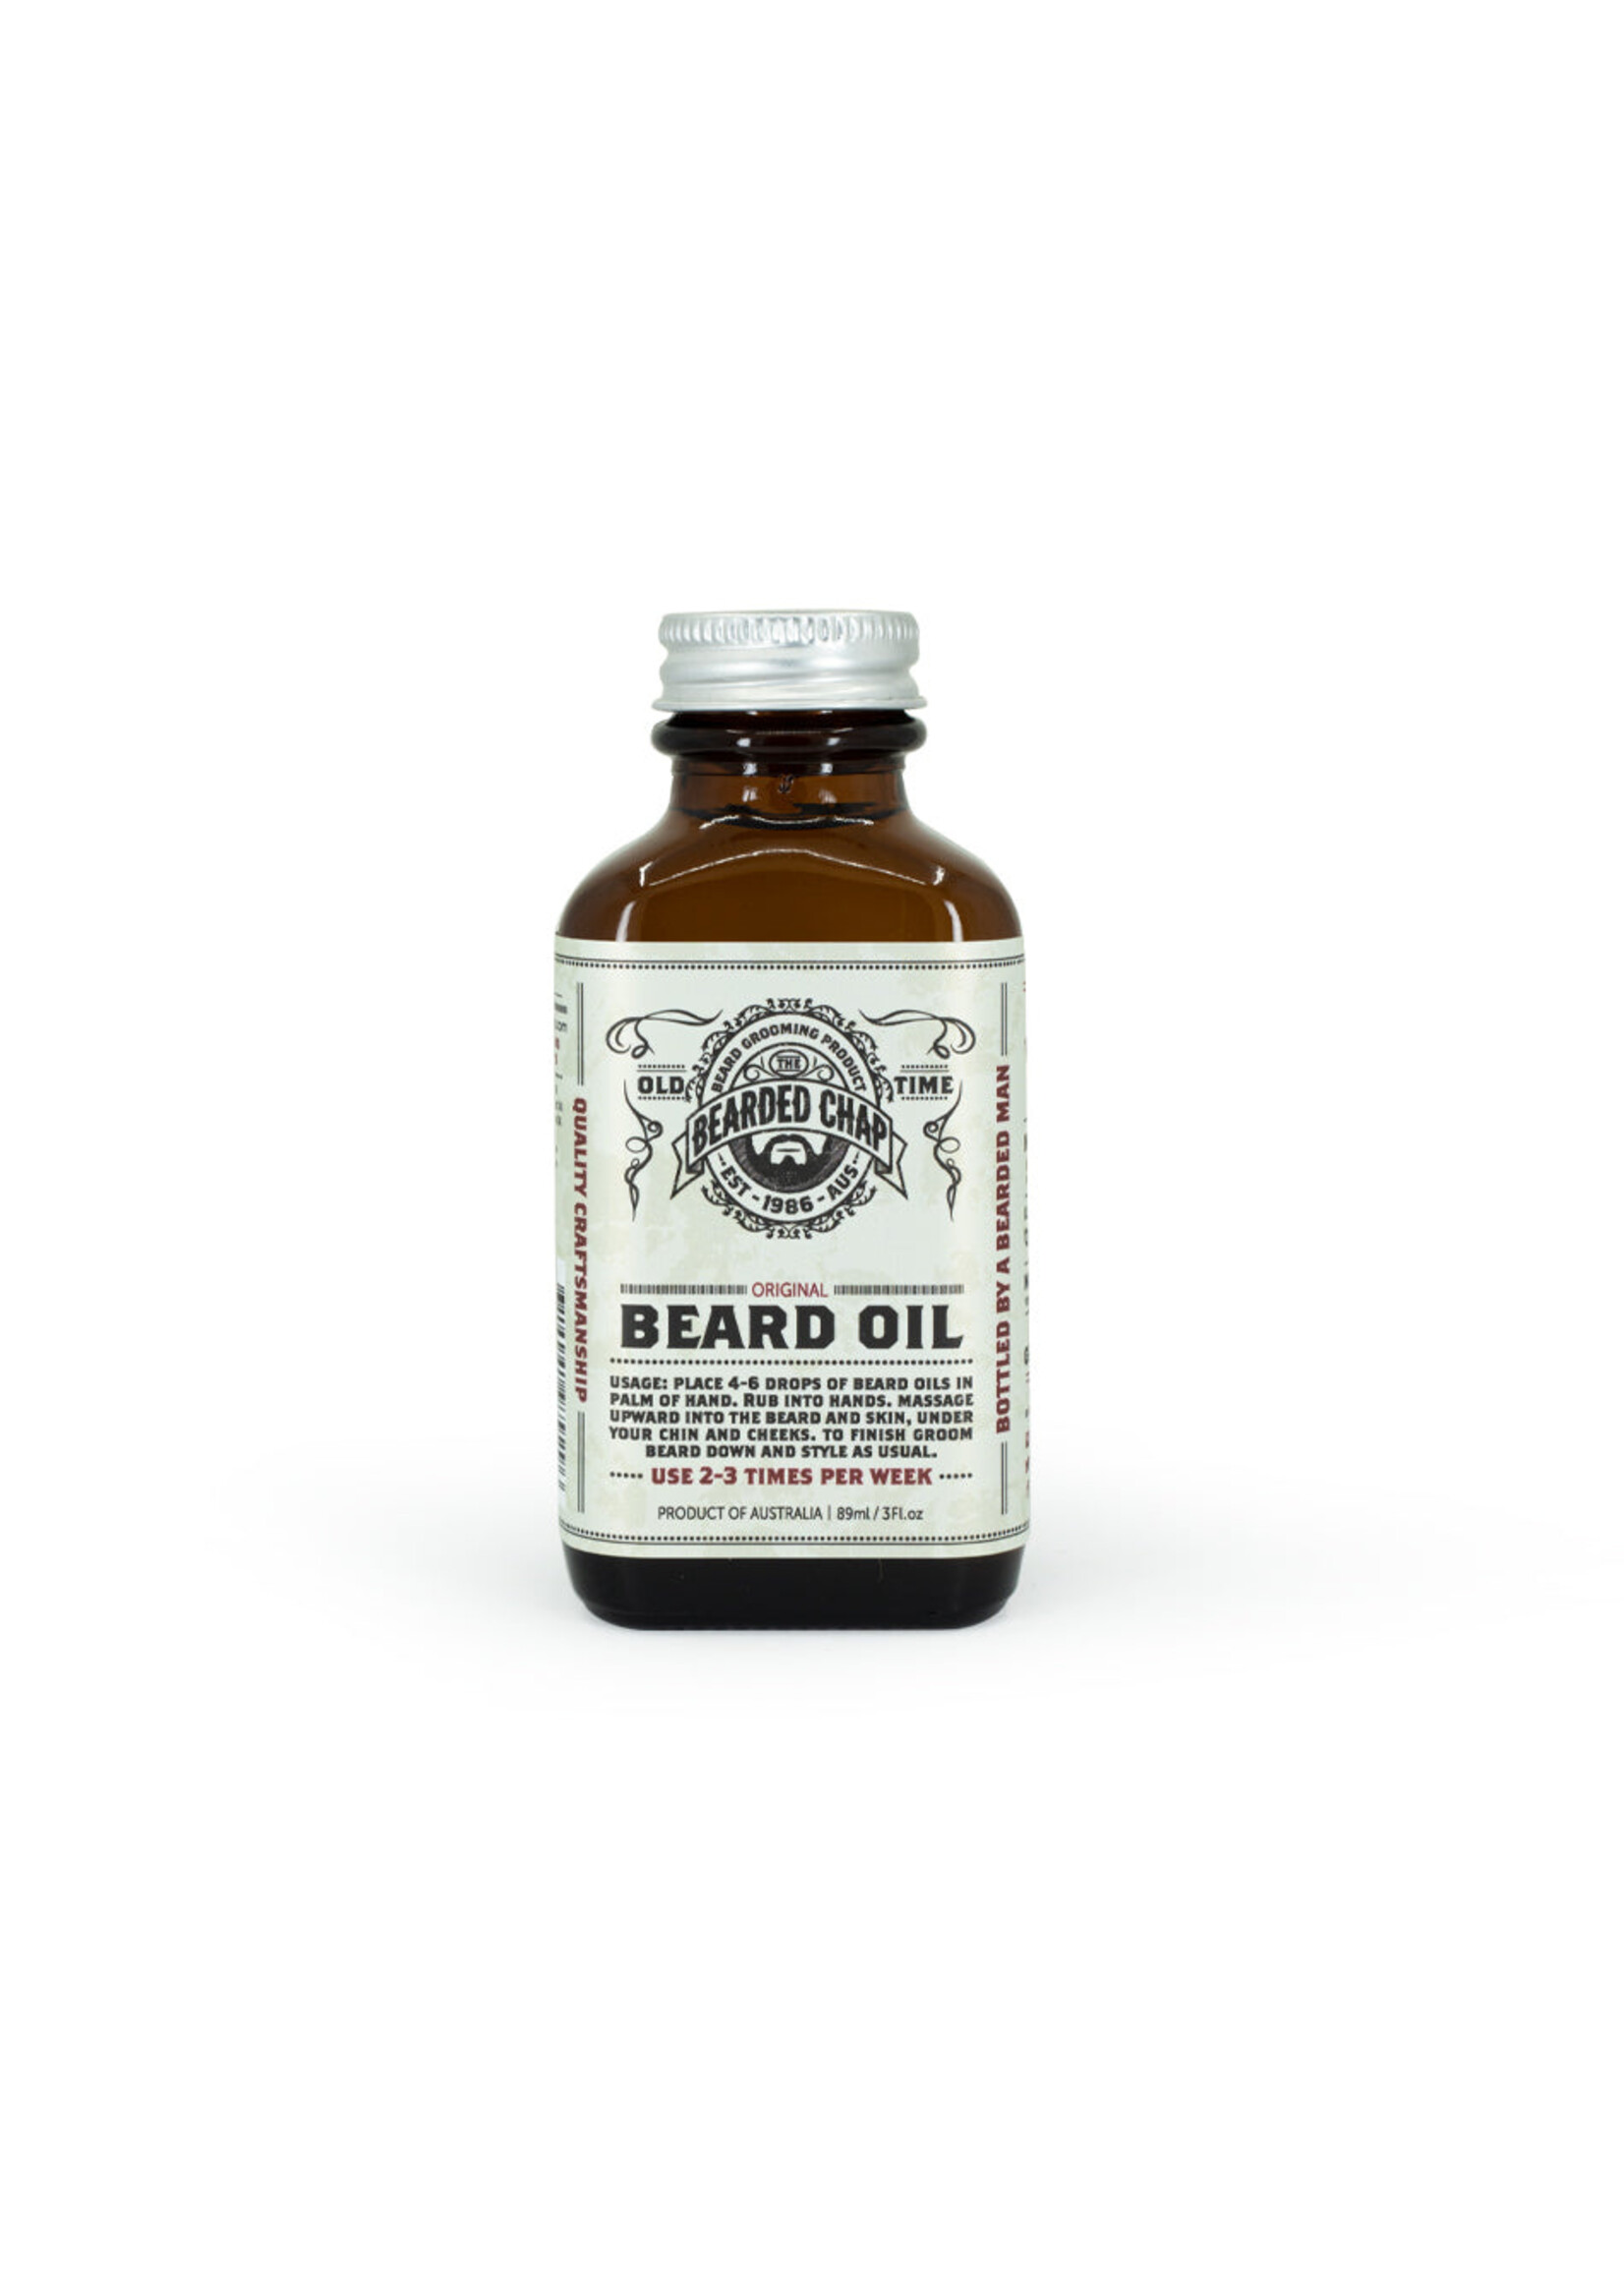 The Bearded Chap Original Beard Oil 89ml